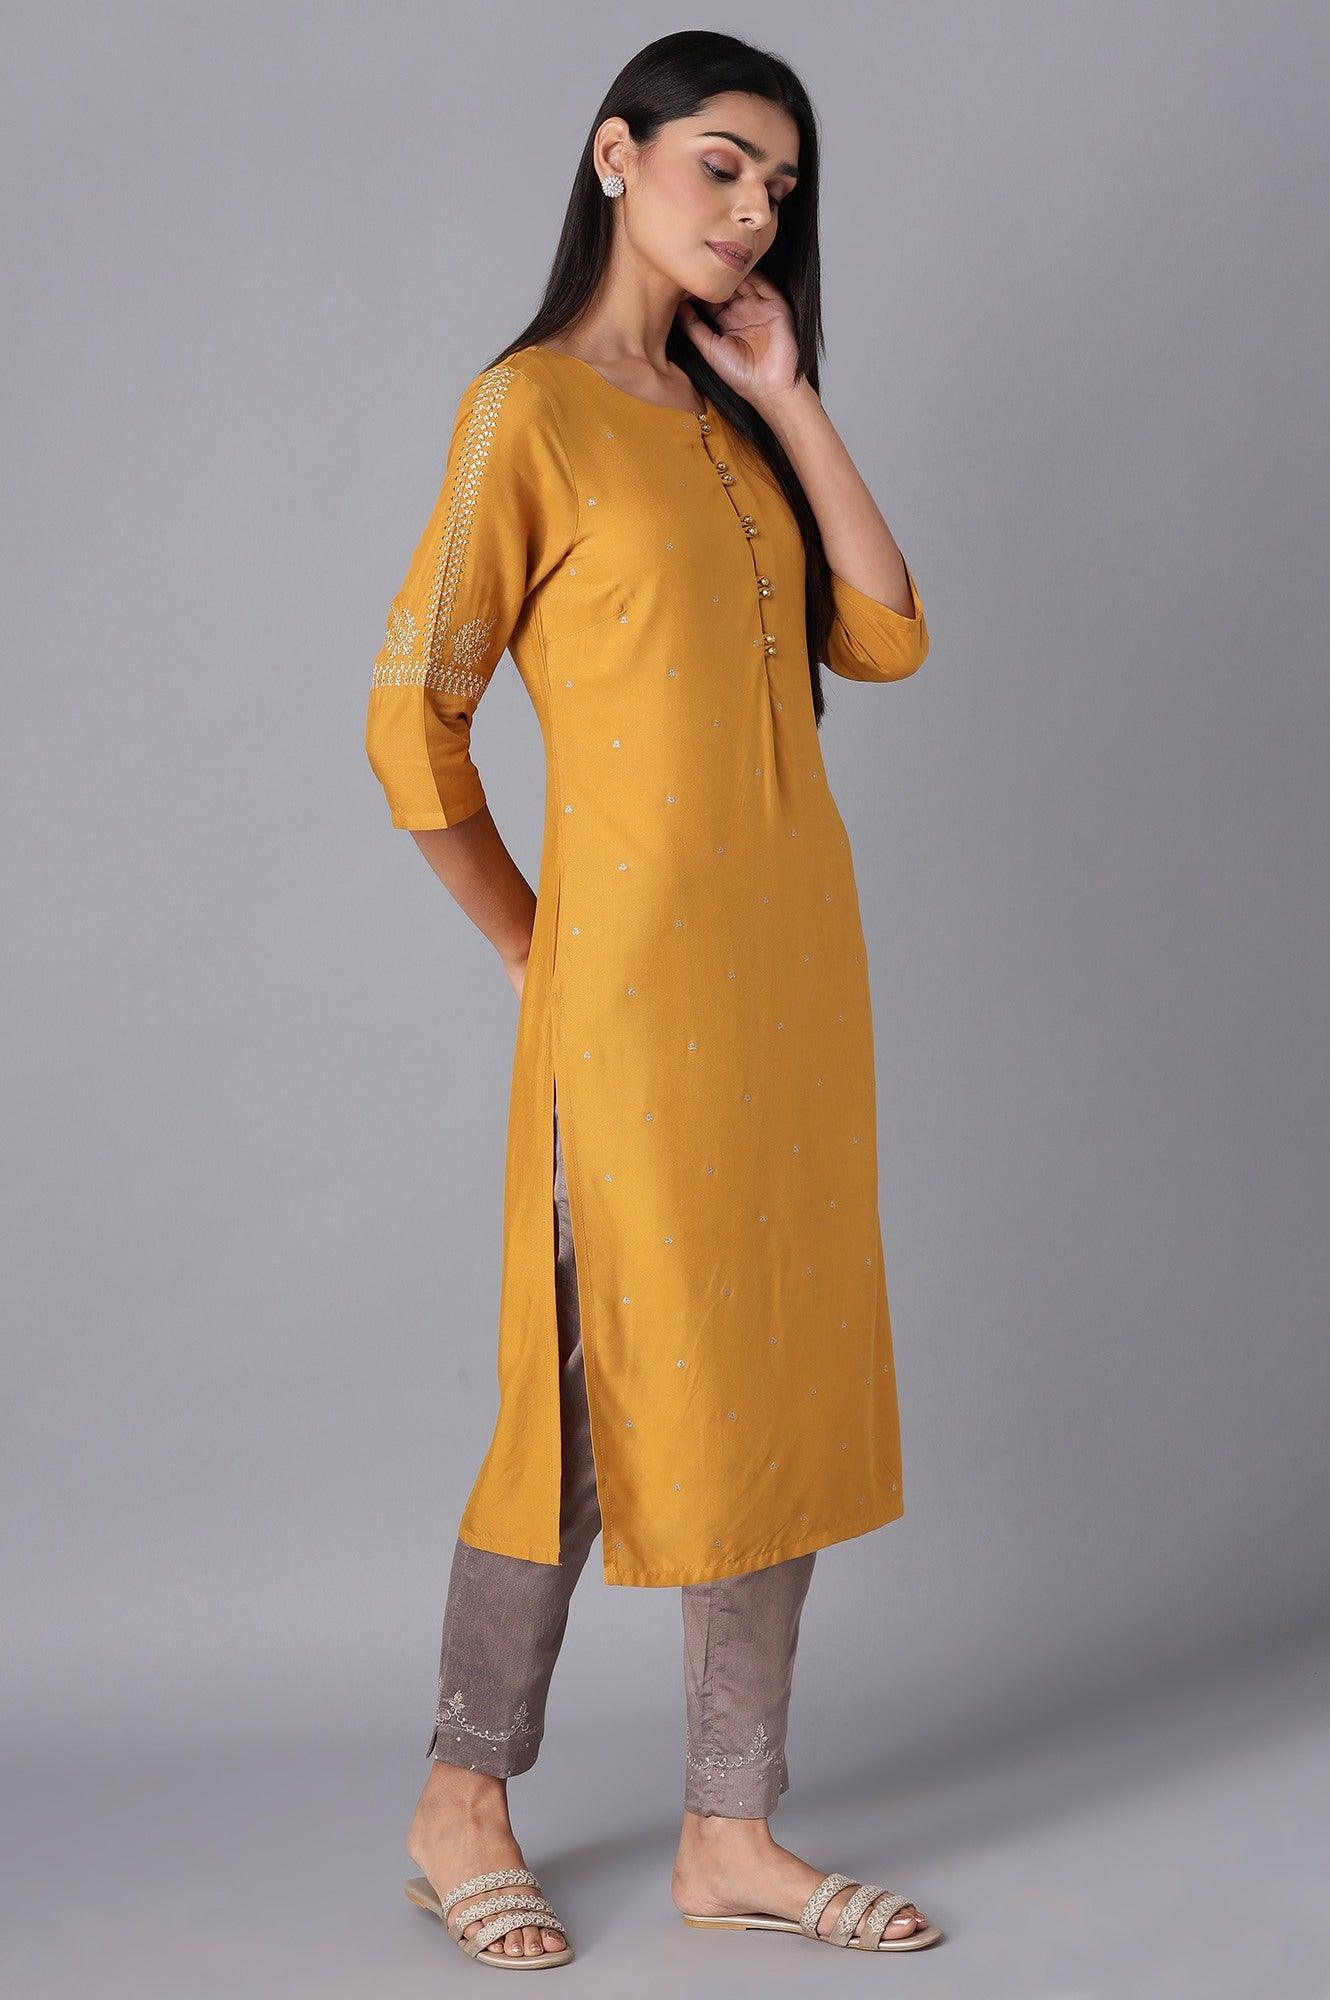 Mustard Yellow kurta with Embroidery - wforwoman